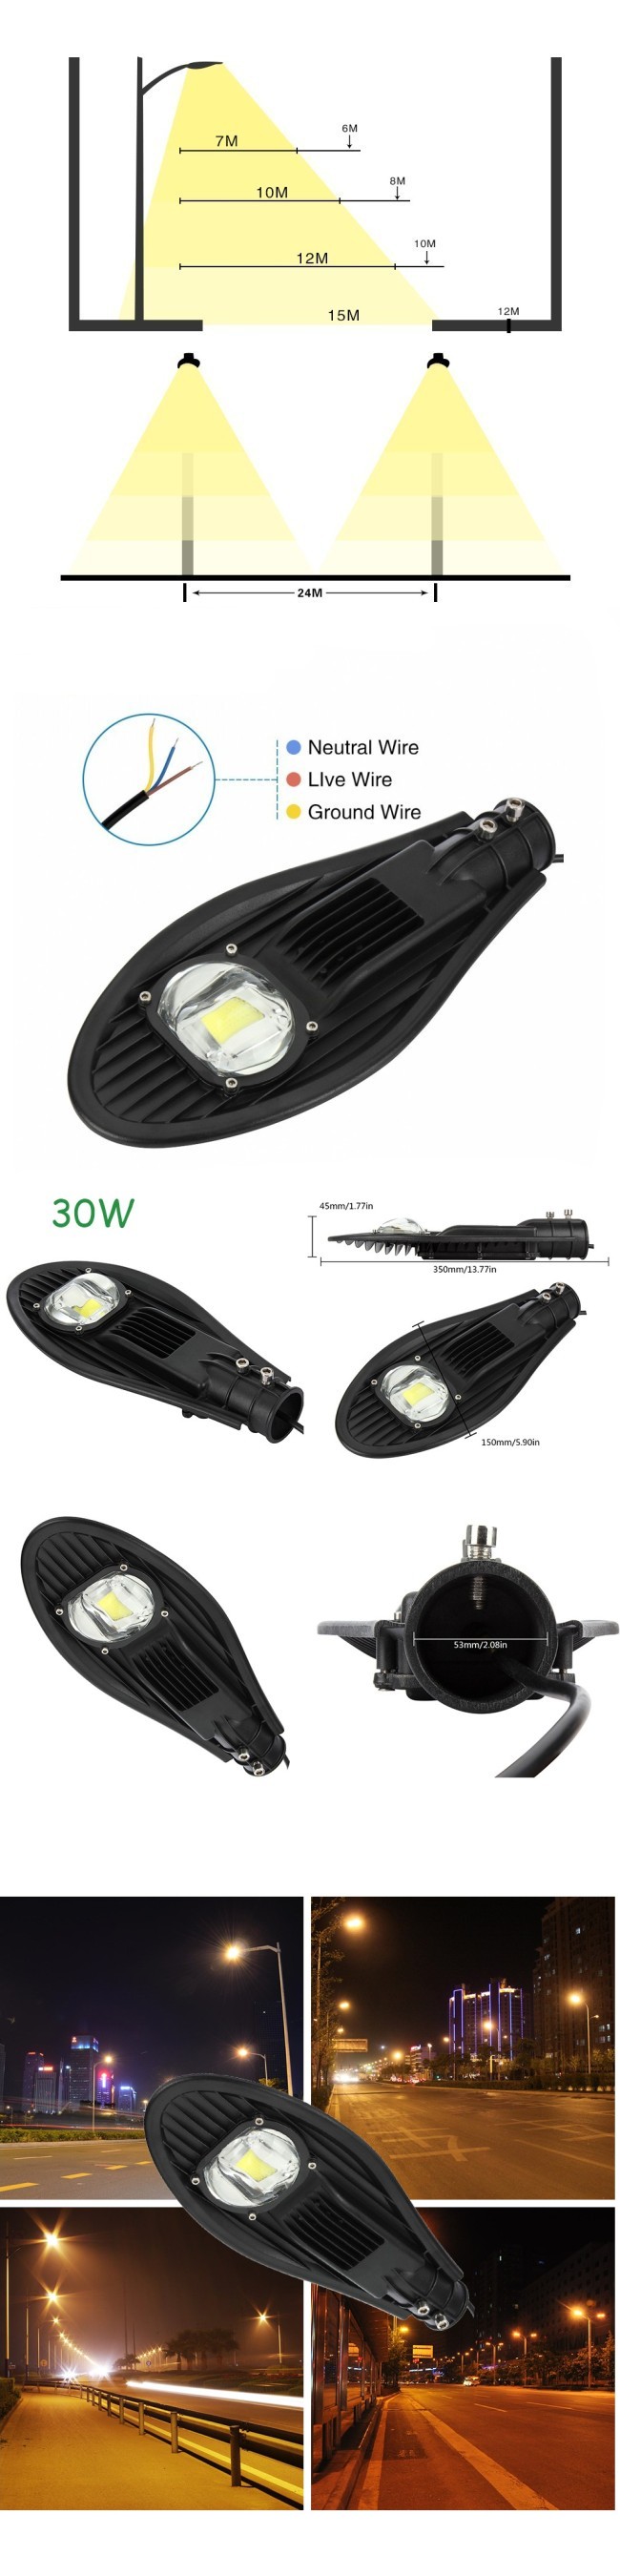 5 Years Warranty 120W LED Street Light High Lumens Outdoor 10kVA Surge Protection